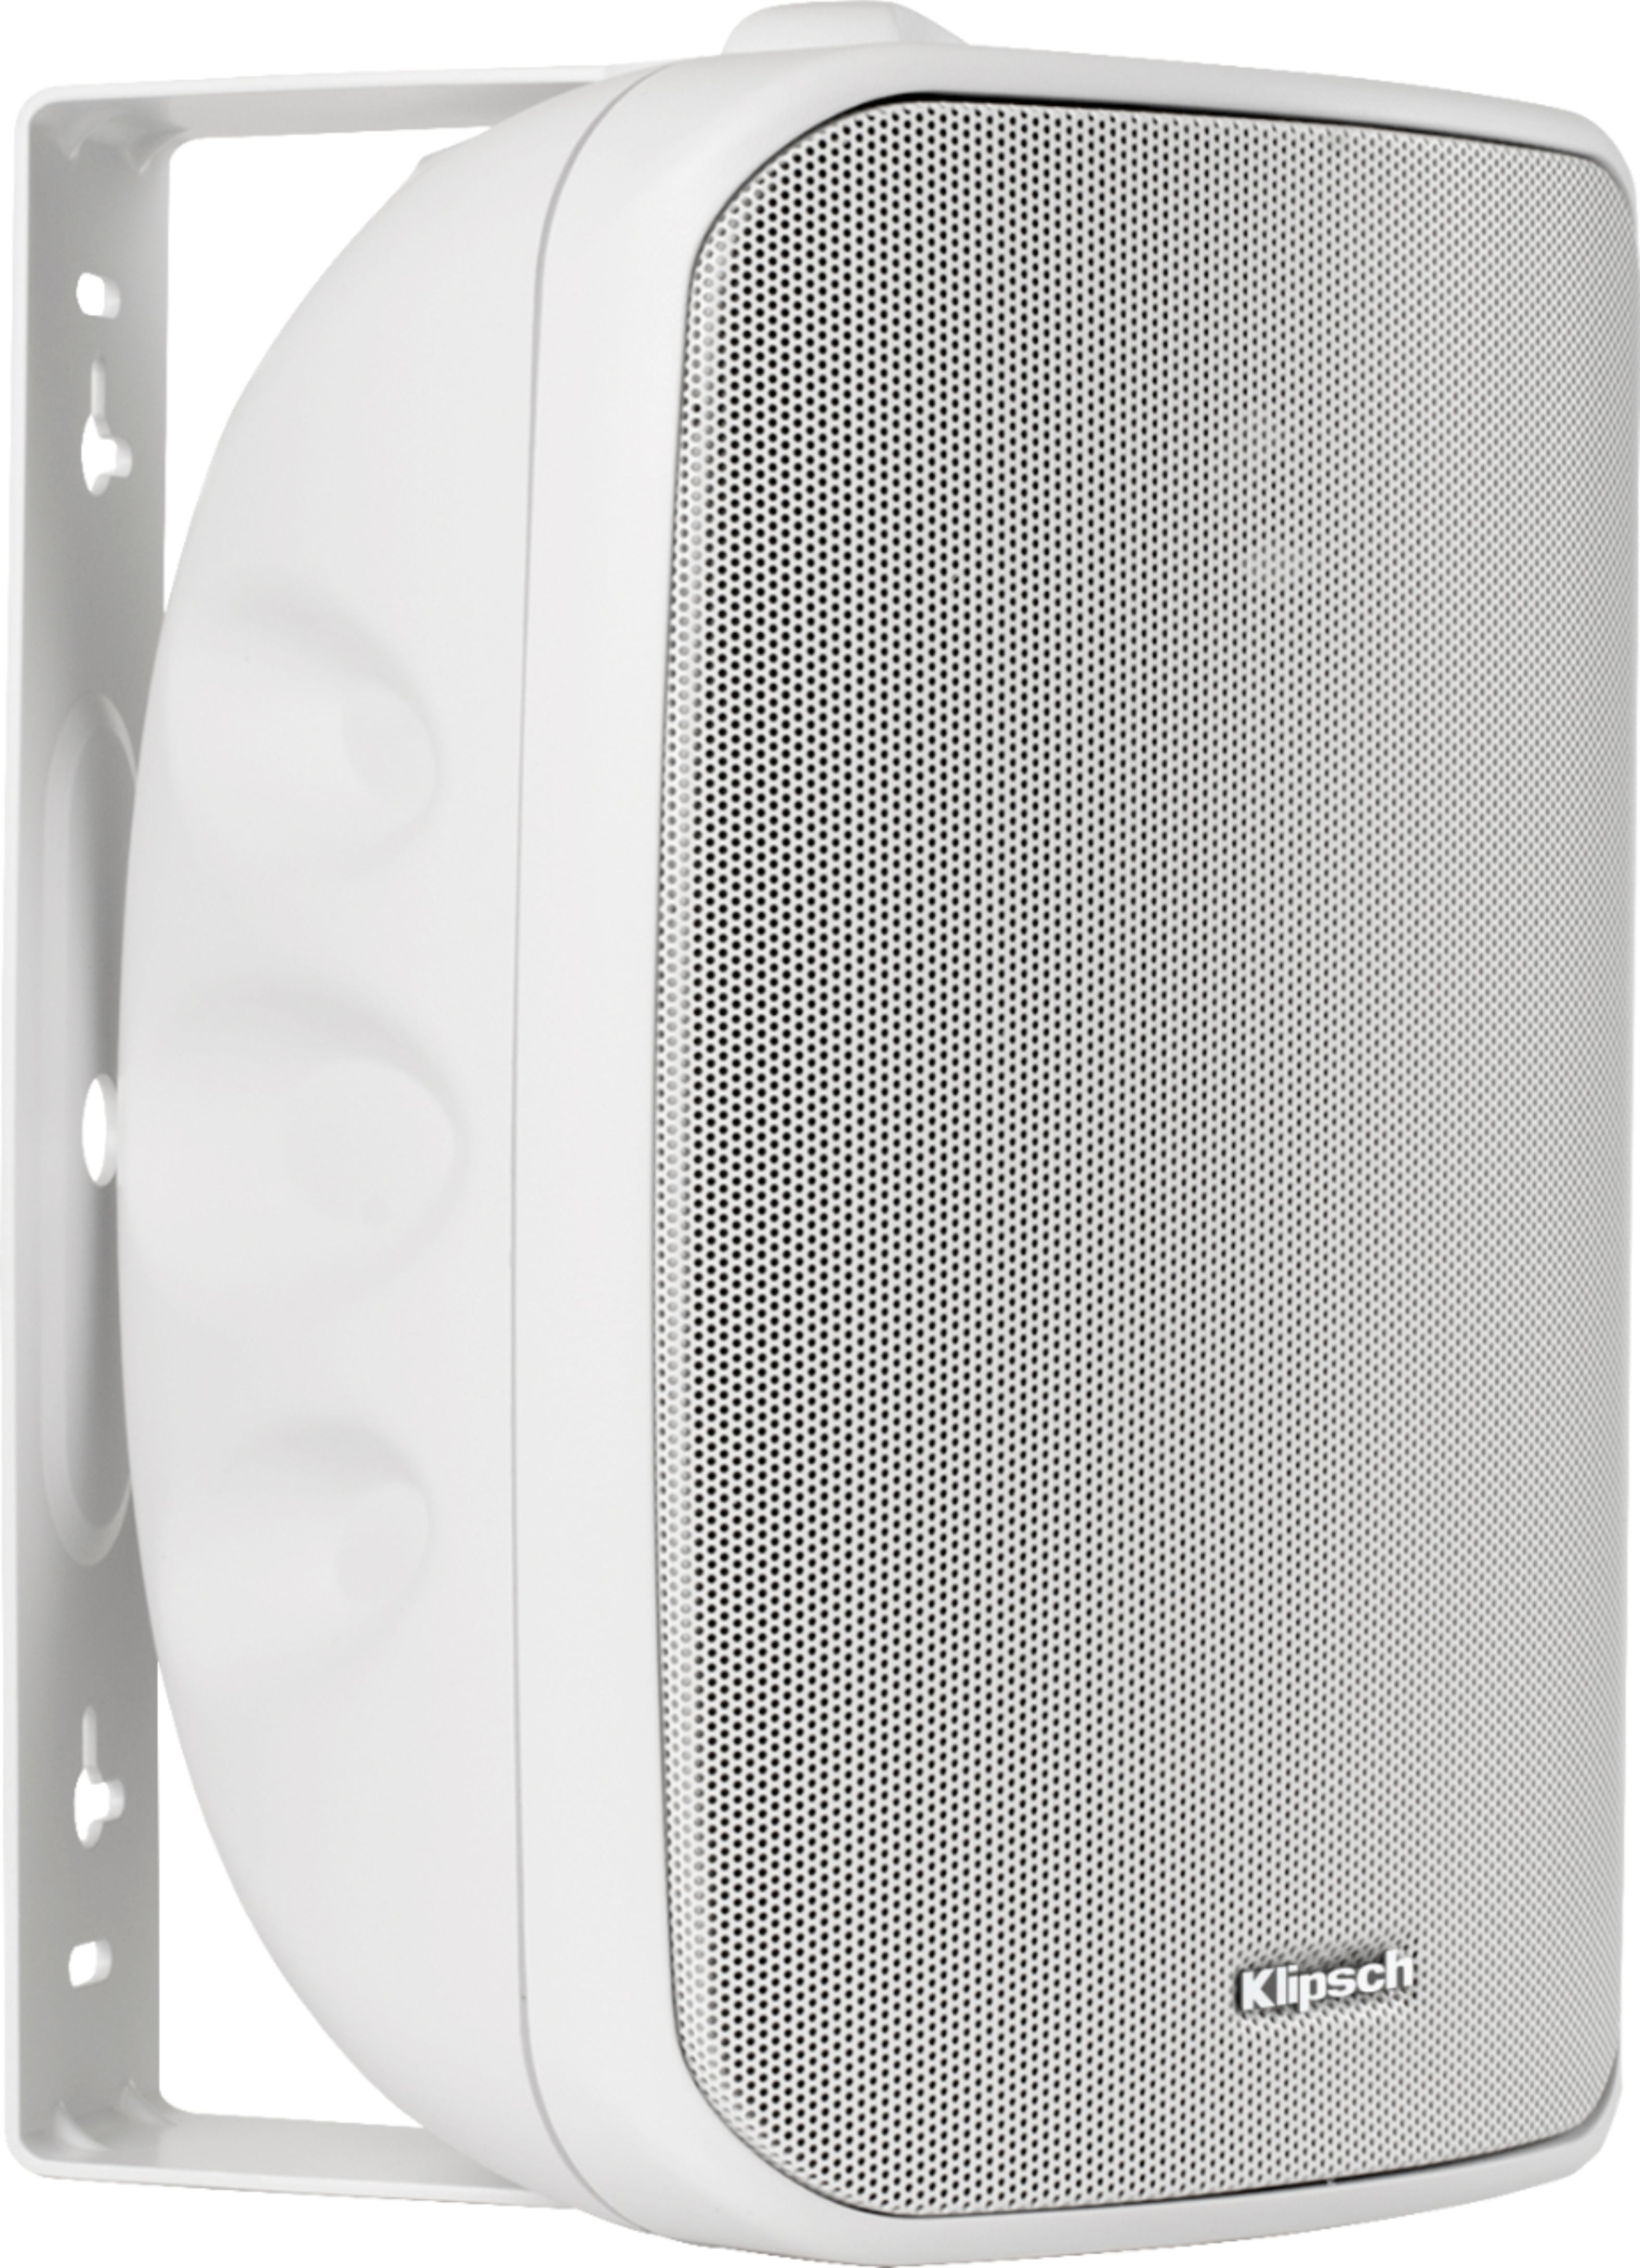 Angle View: Klipsch - 300W Outdoor Speaker (Pair) - White